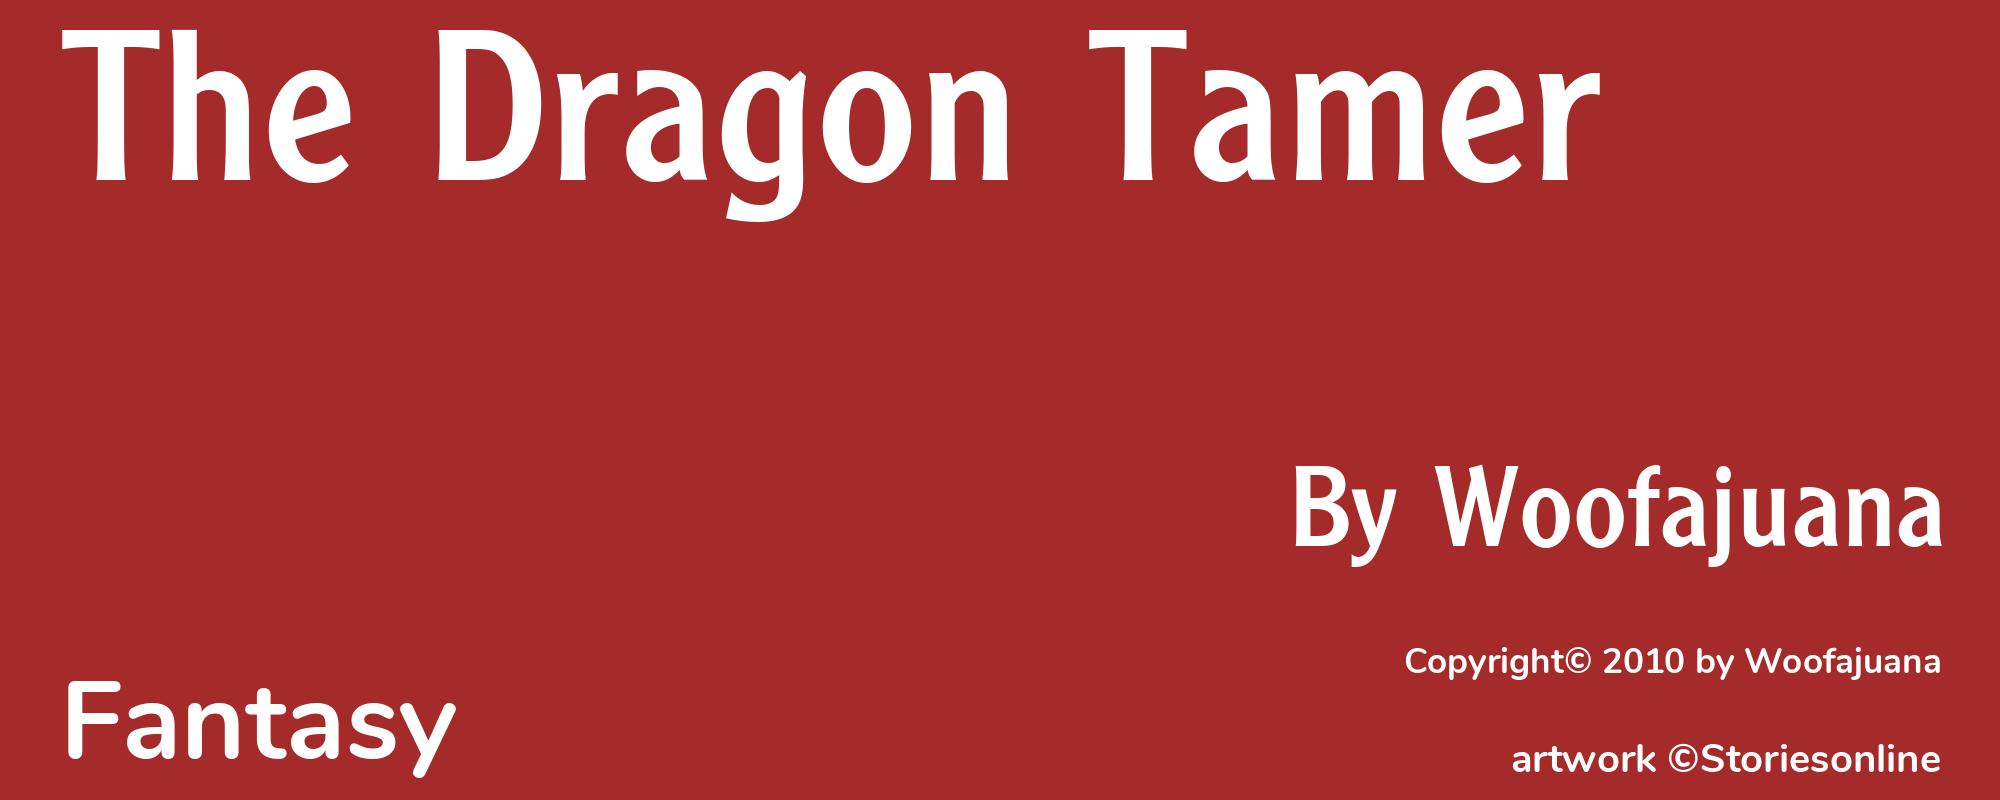 The Dragon Tamer  - Cover